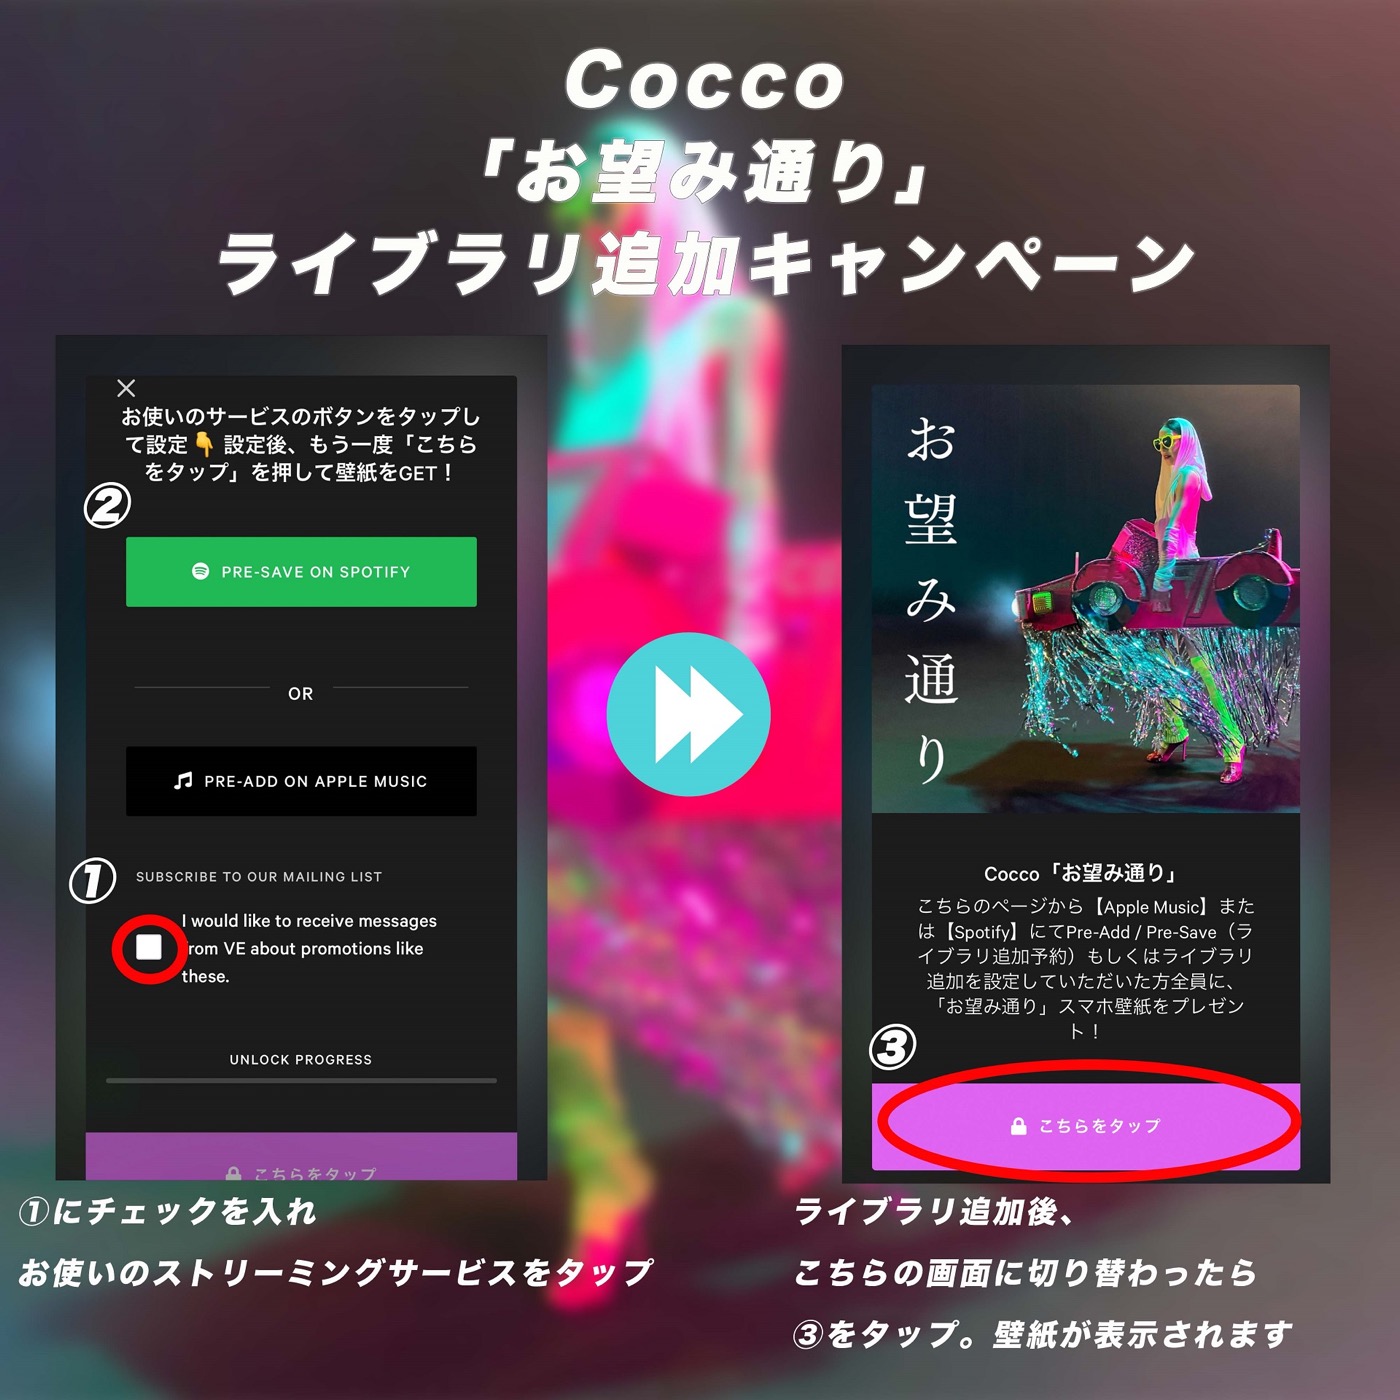 Cocco、妖艶さに満ちた新曲「お望み通り」MVのプレミア公開が決定 - 画像一覧（1/3）